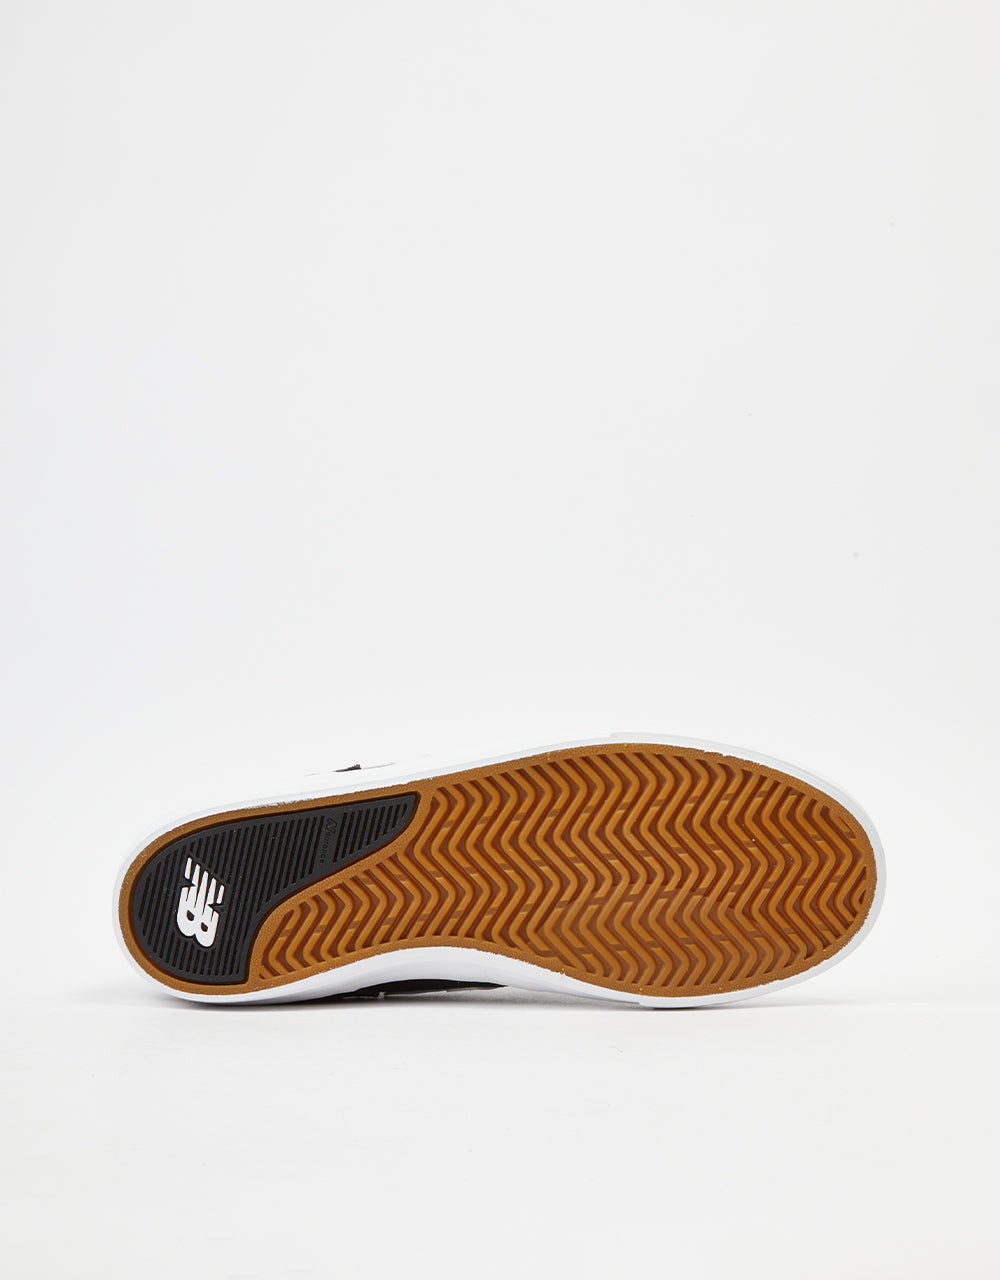 New Balance Numeric Jamie Foy 306 Skate Shoes - Black/White